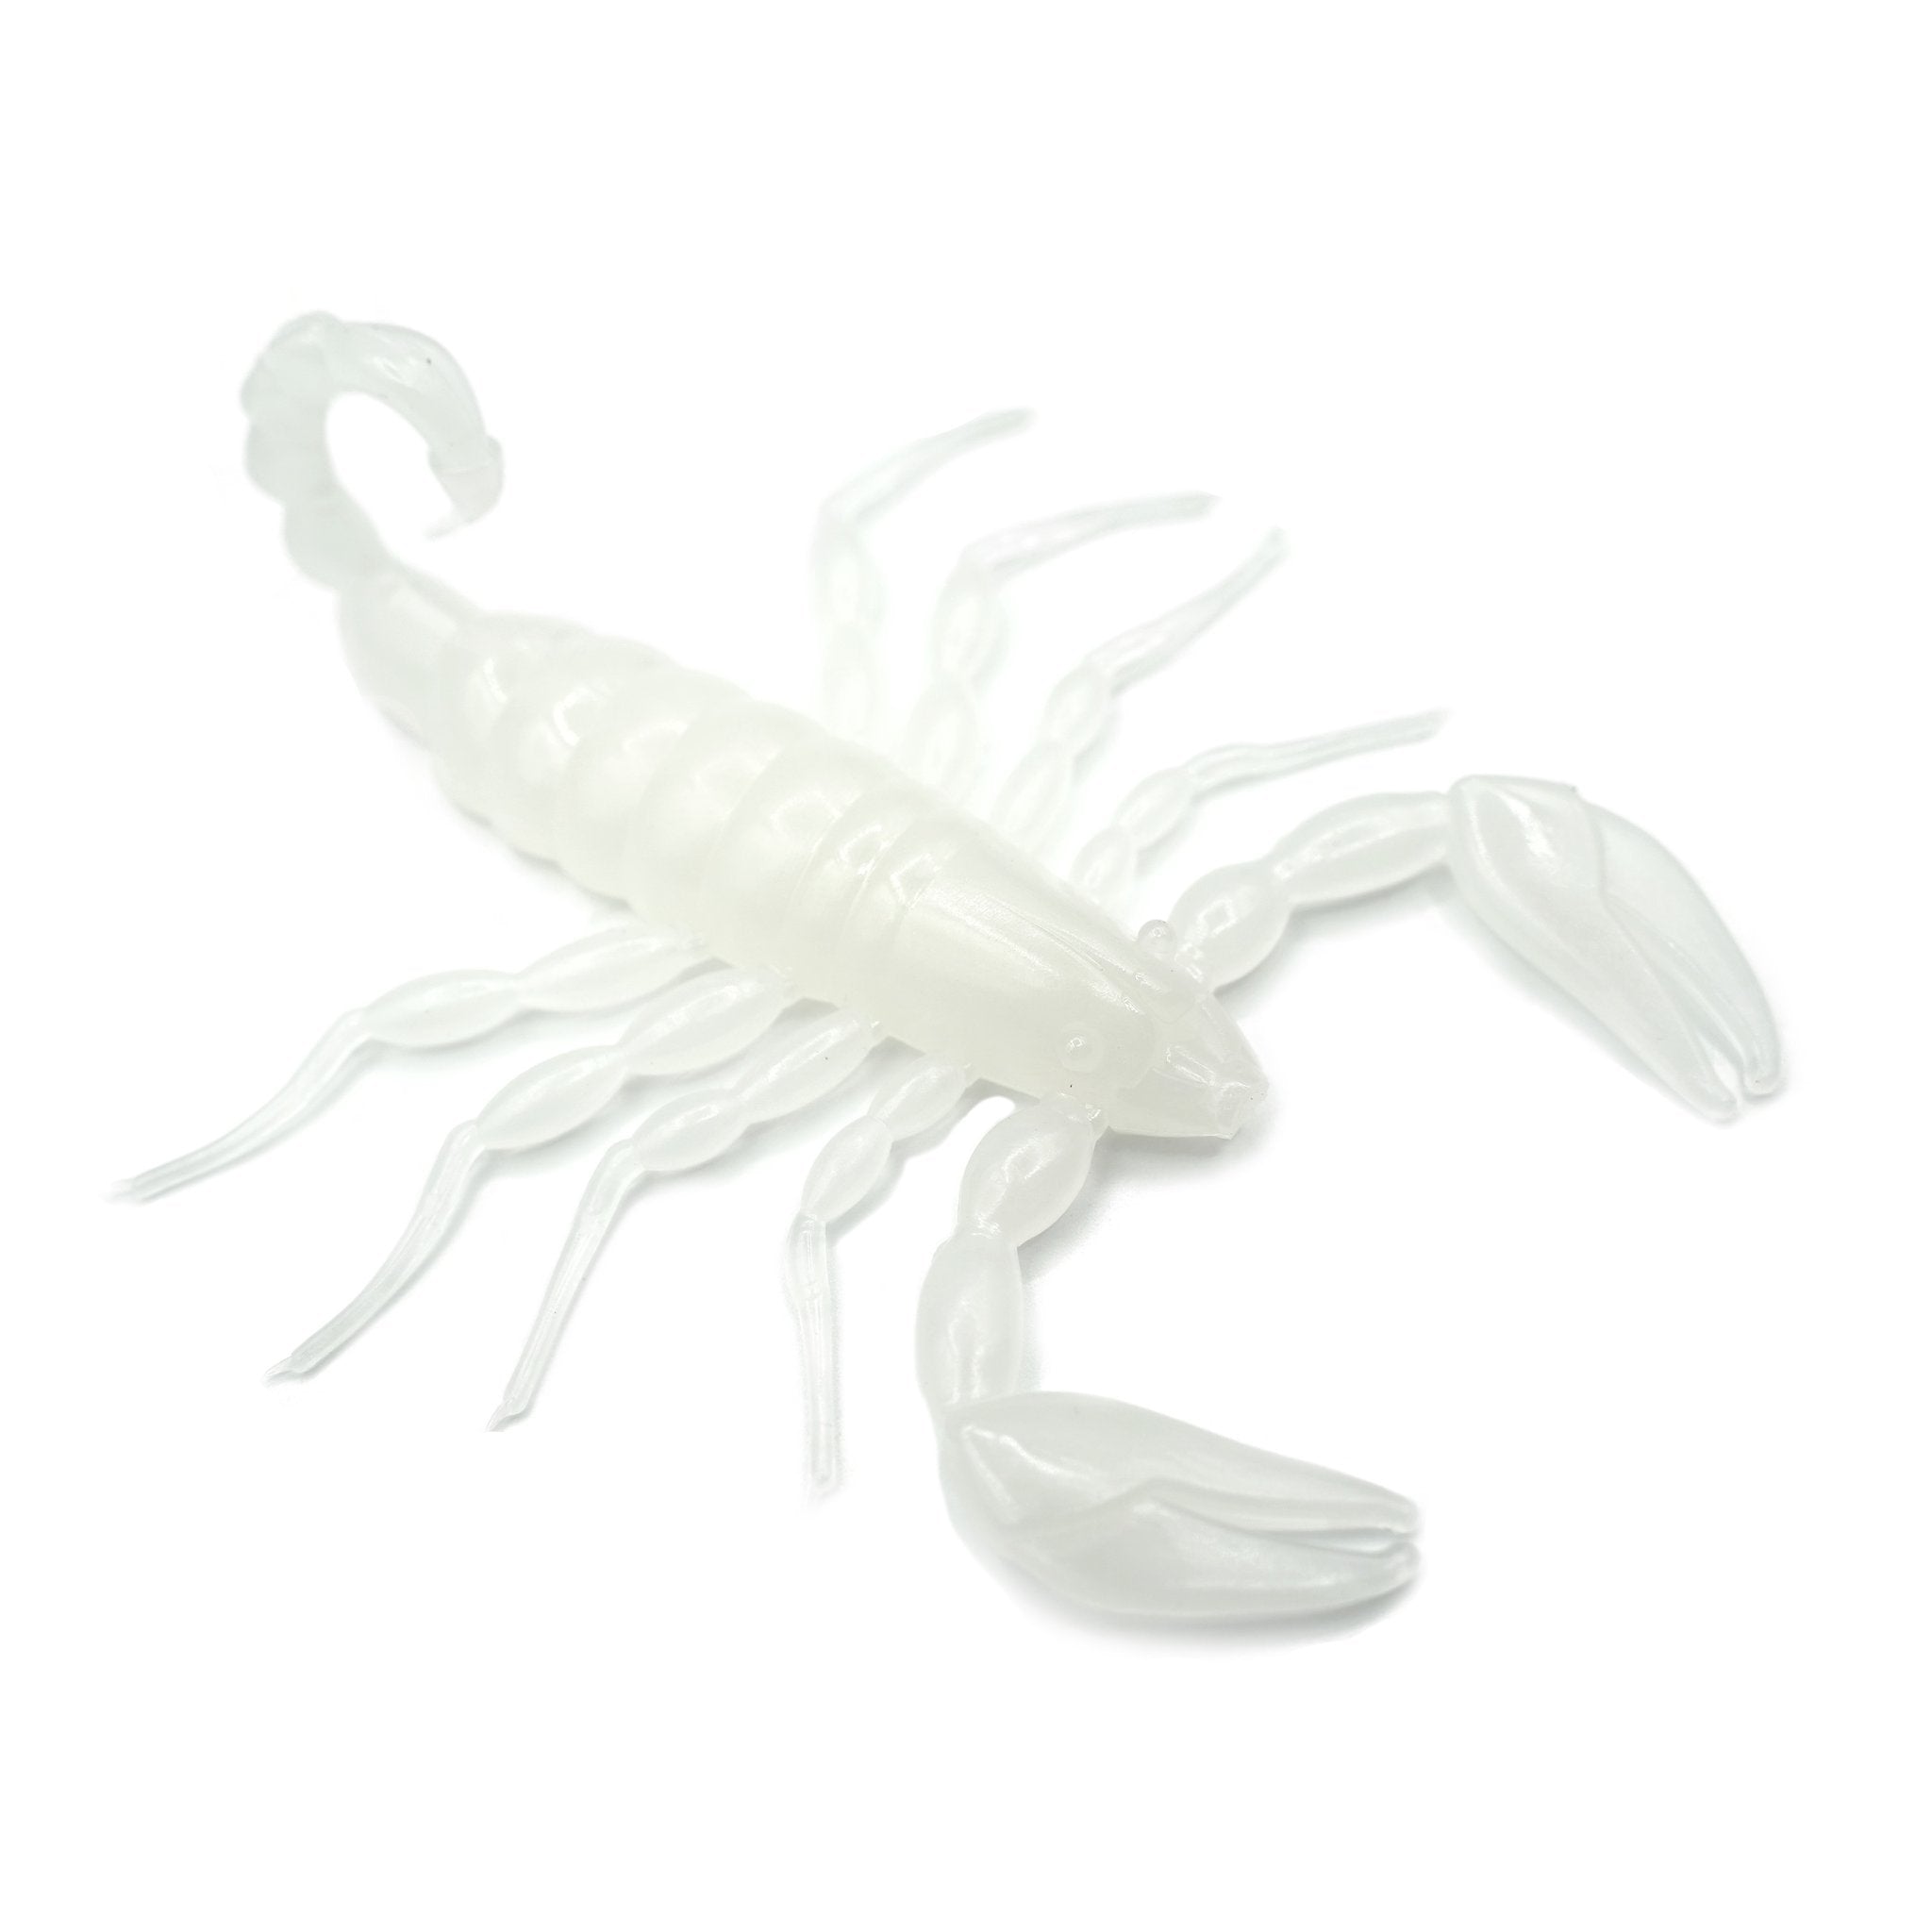 Fresh Baitz Scorpion – Custom Tackle Supply